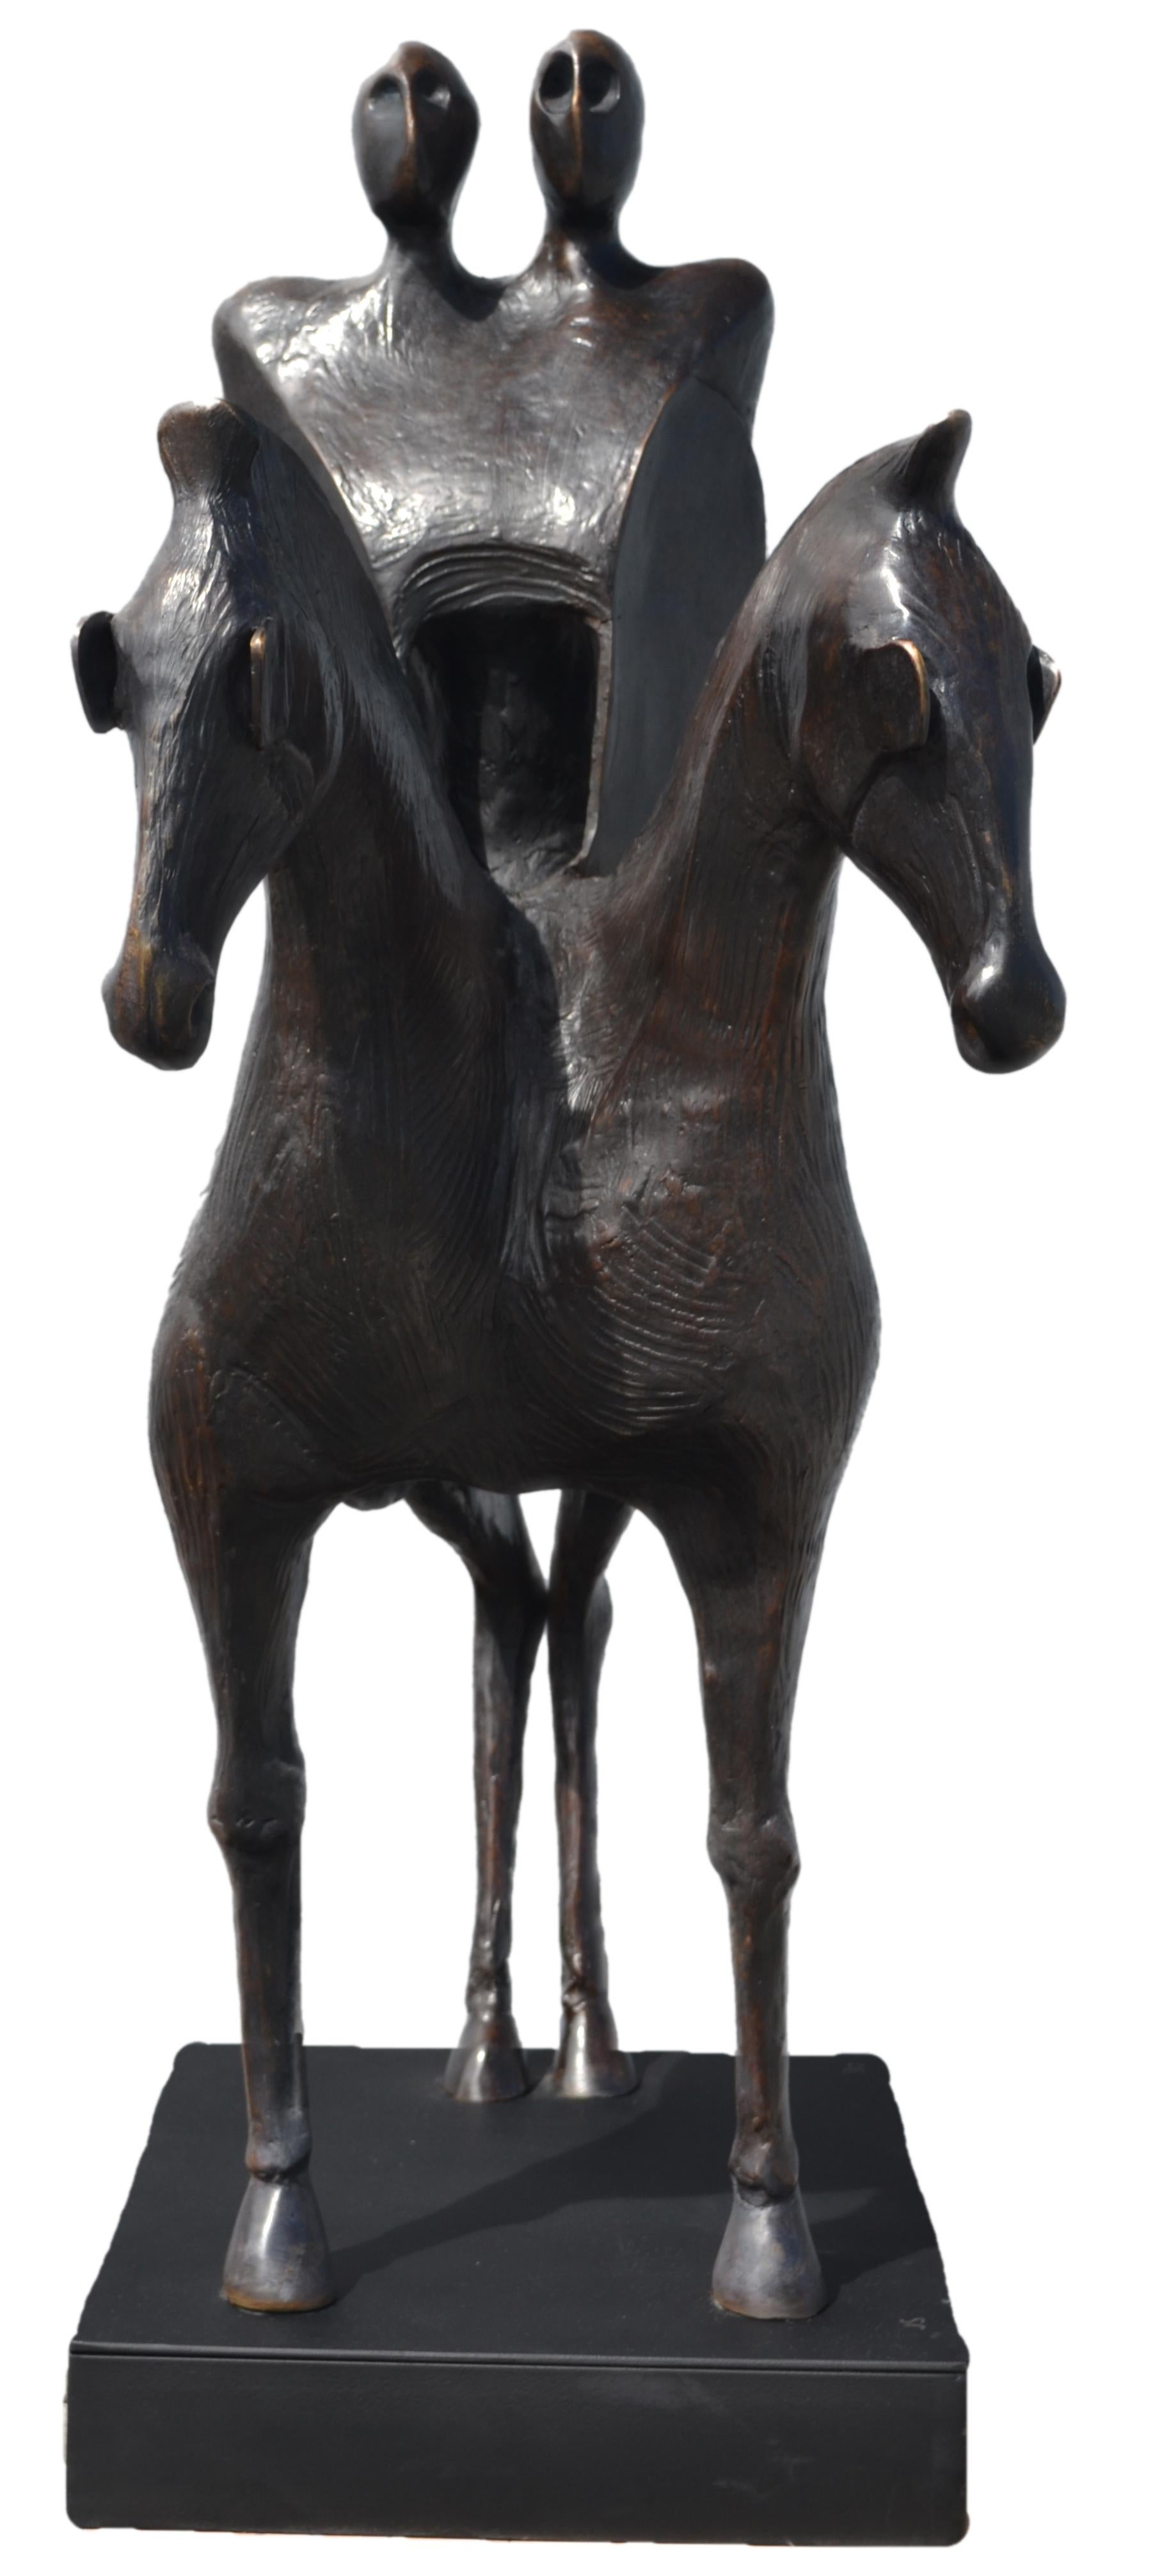 Figurative Sculpture Jorge Seguí  - Jorge Segu, Falsos Heroes en Caballos Mticos, bronze, édition 1/7, 2010-2013